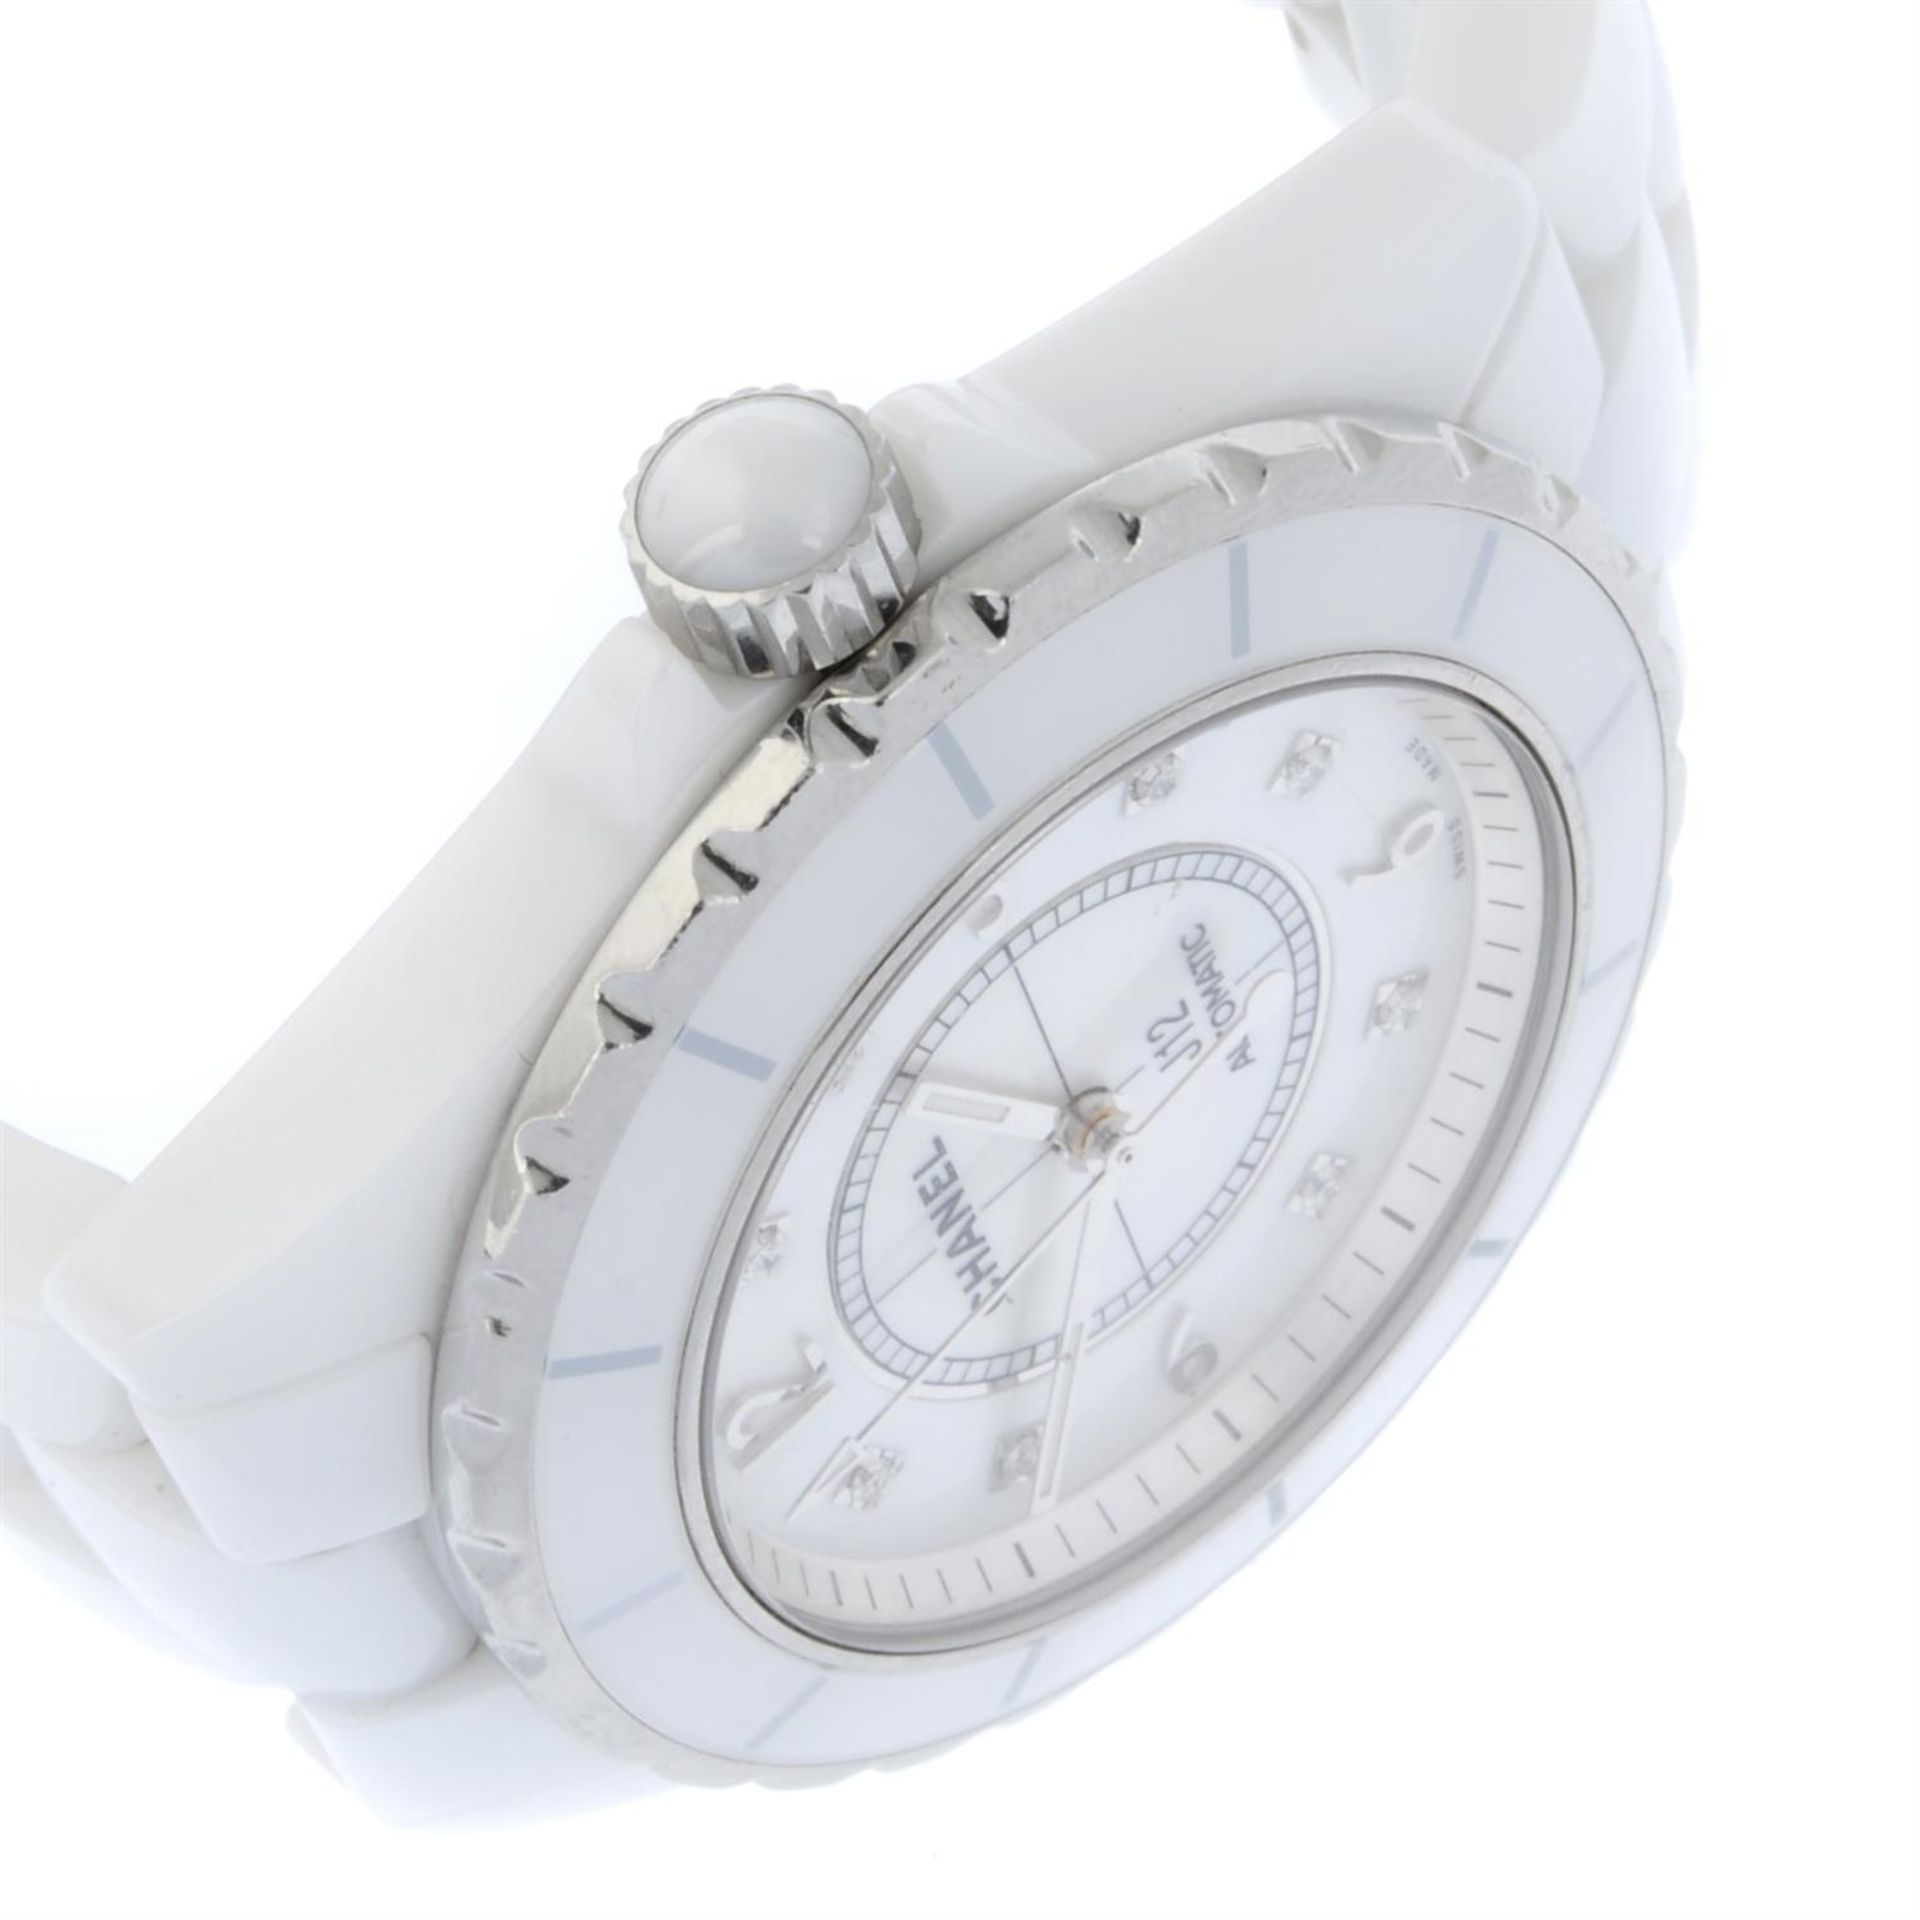 CHANEL - a ceramic J12 bracelet watch, 37mm. - Image 3 of 6